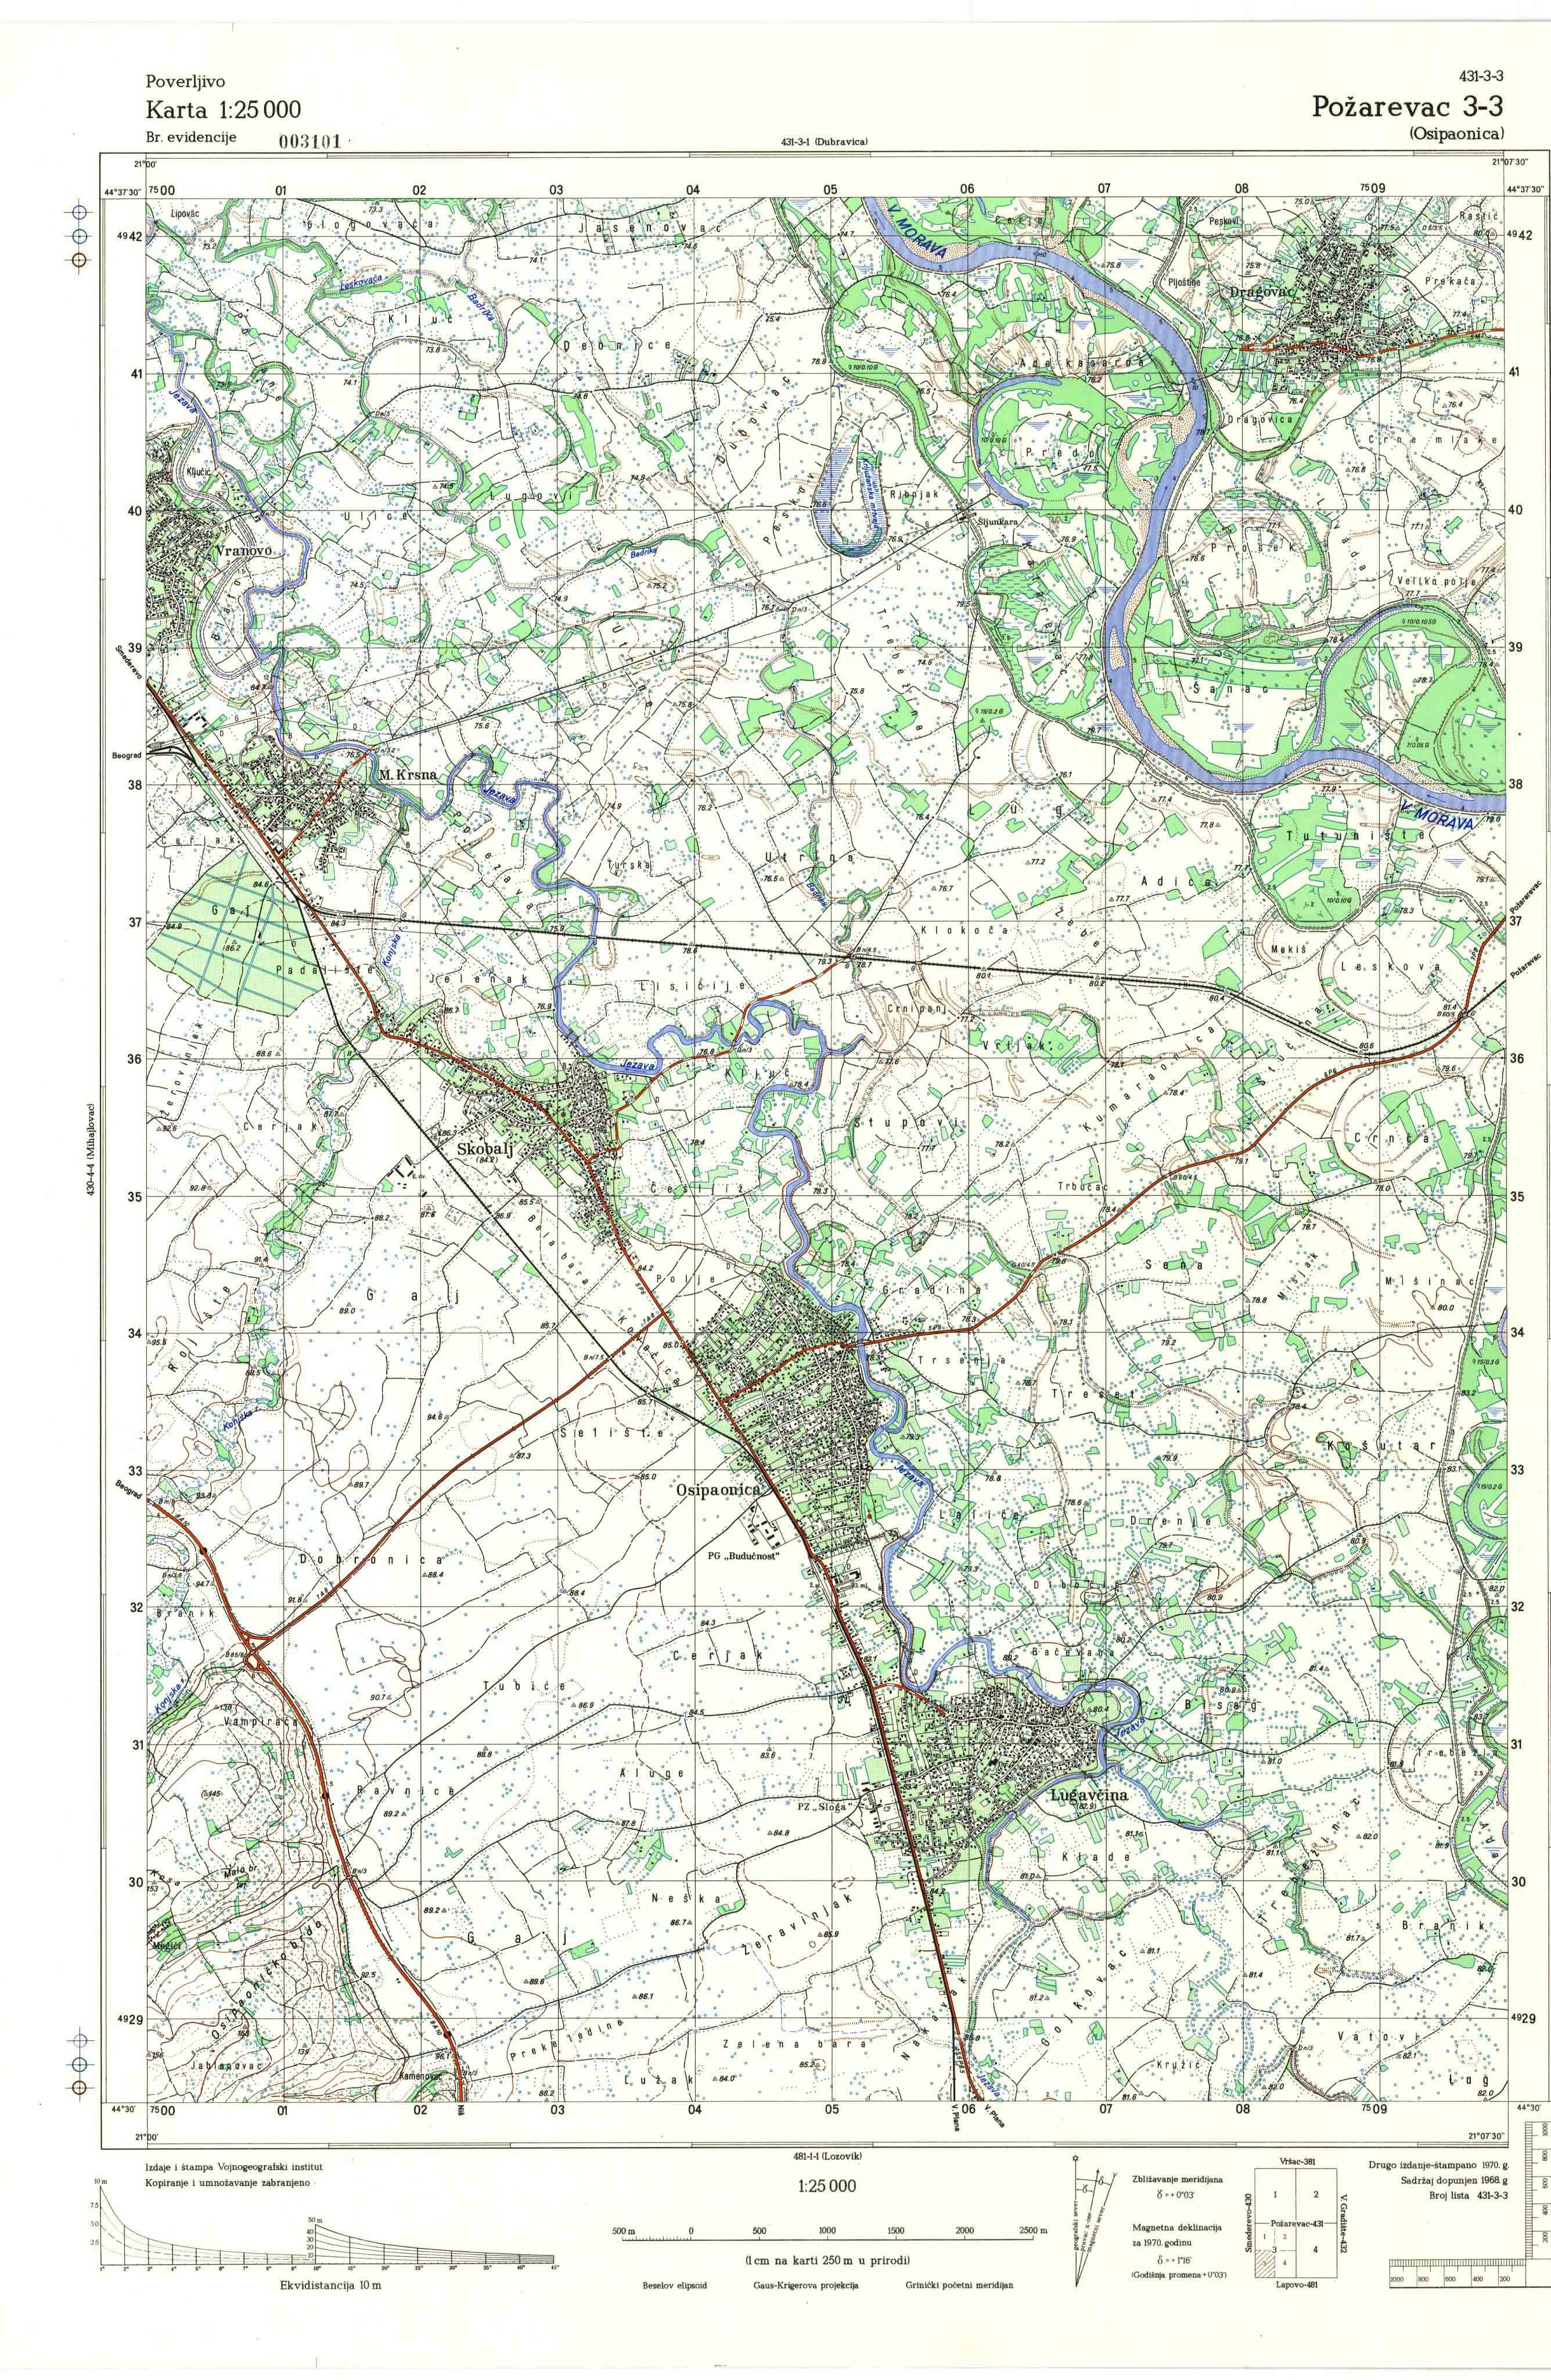  topografska karta srbije 25000 JNA  PoŽarevac